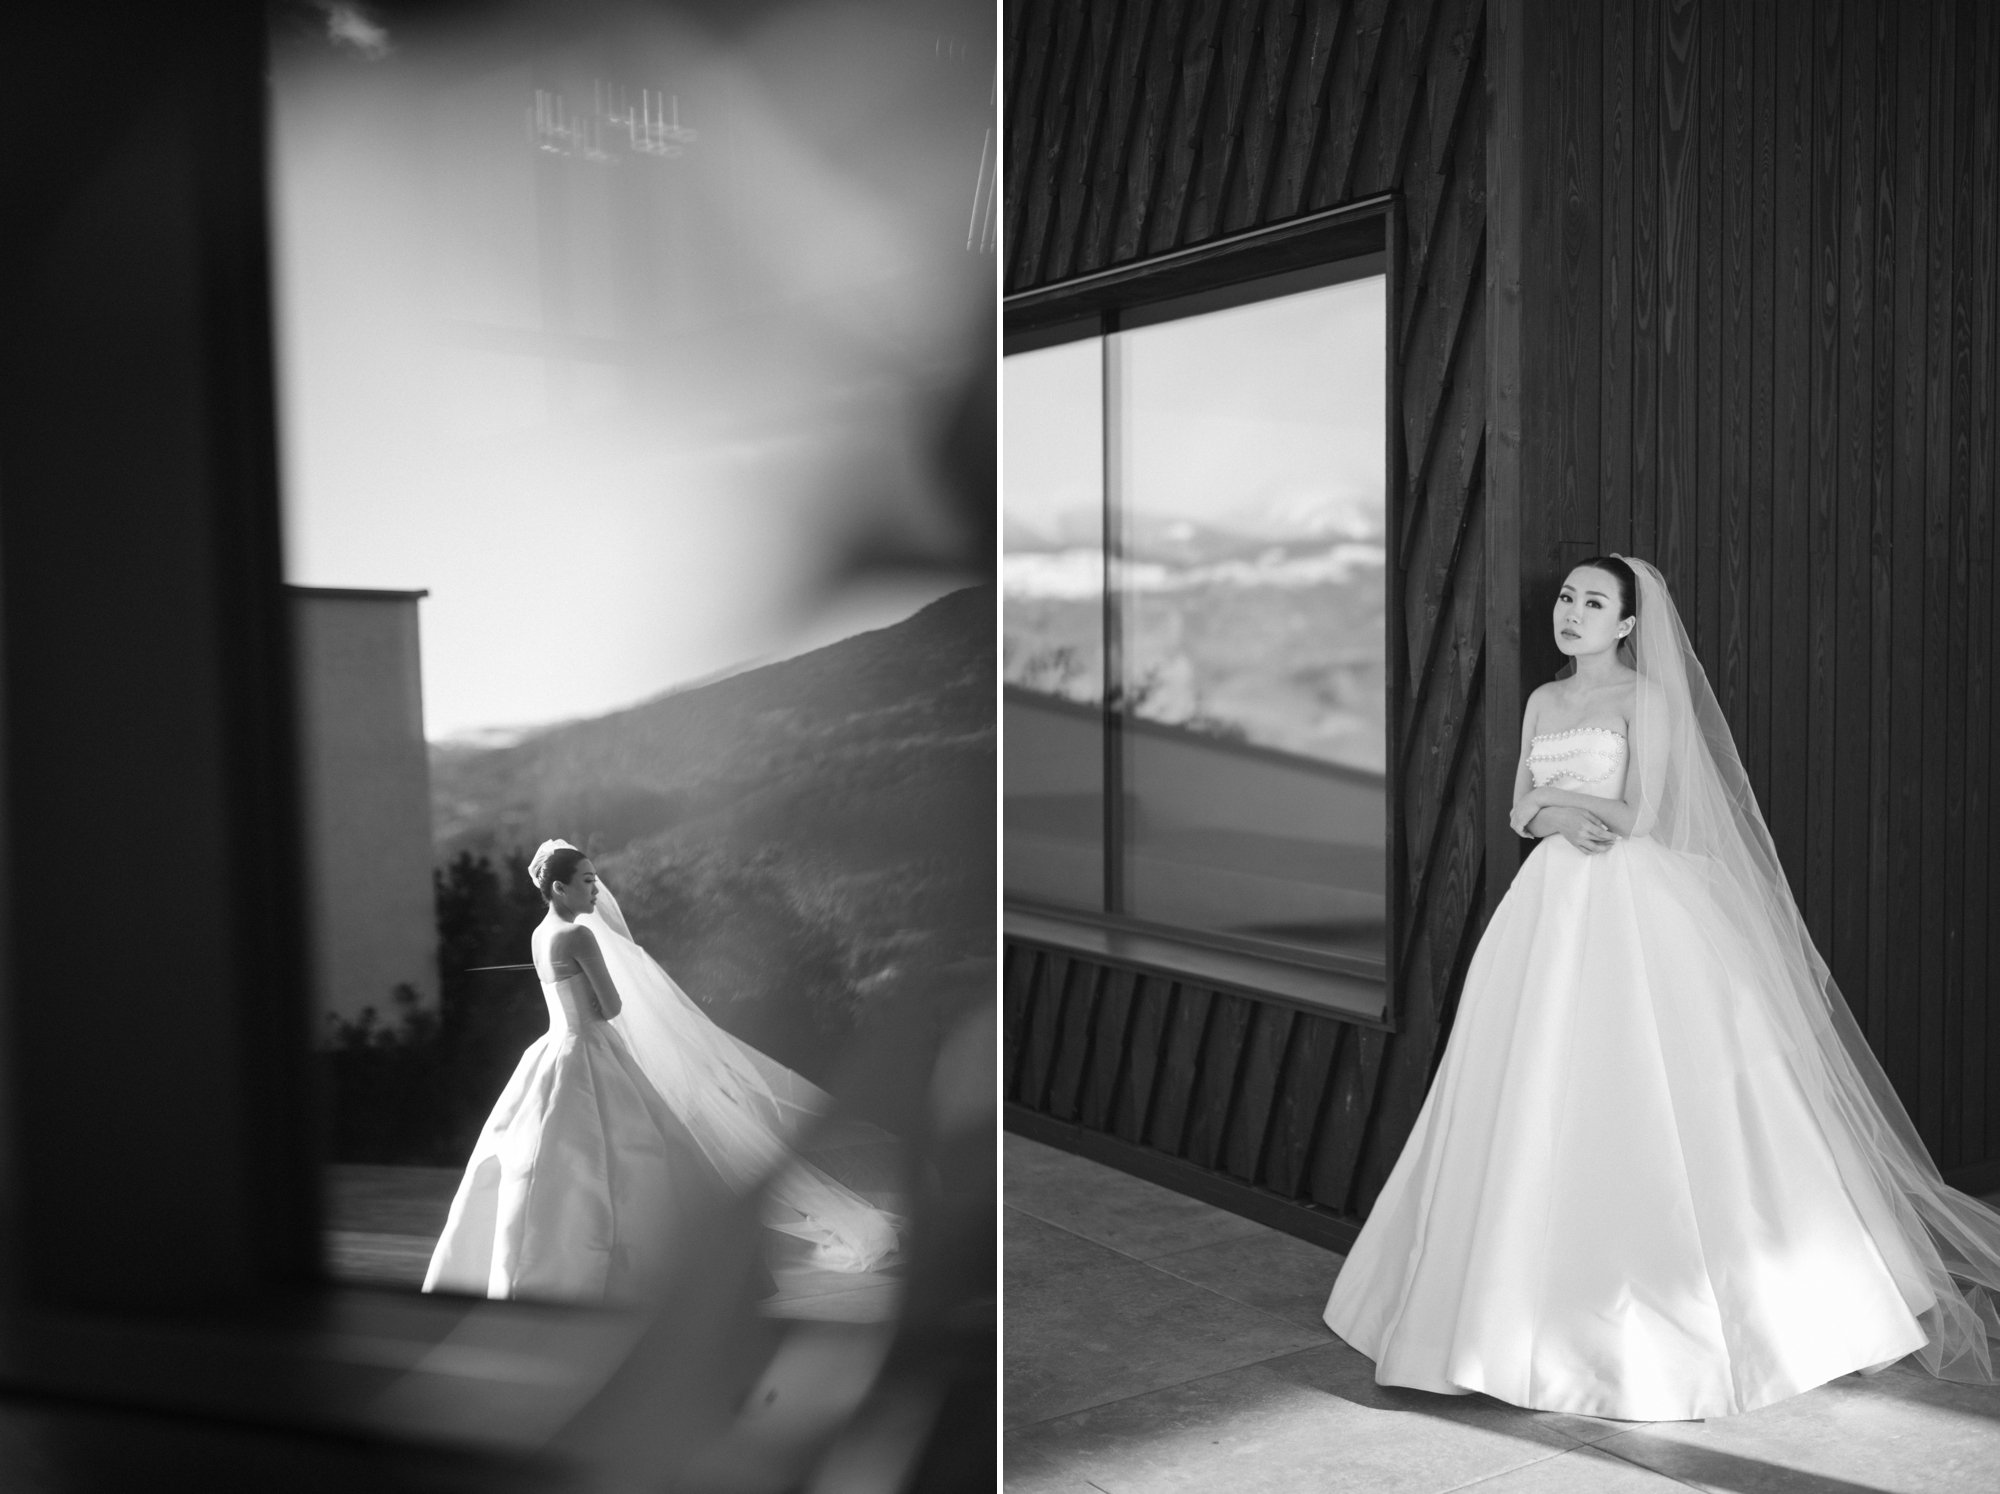 Prawira-Evelyn-Dolomites-Italy-Santre wedding-Yefta Gunawan-Jeriko MUA-Carol Kuntjoro Photography-90.jpg